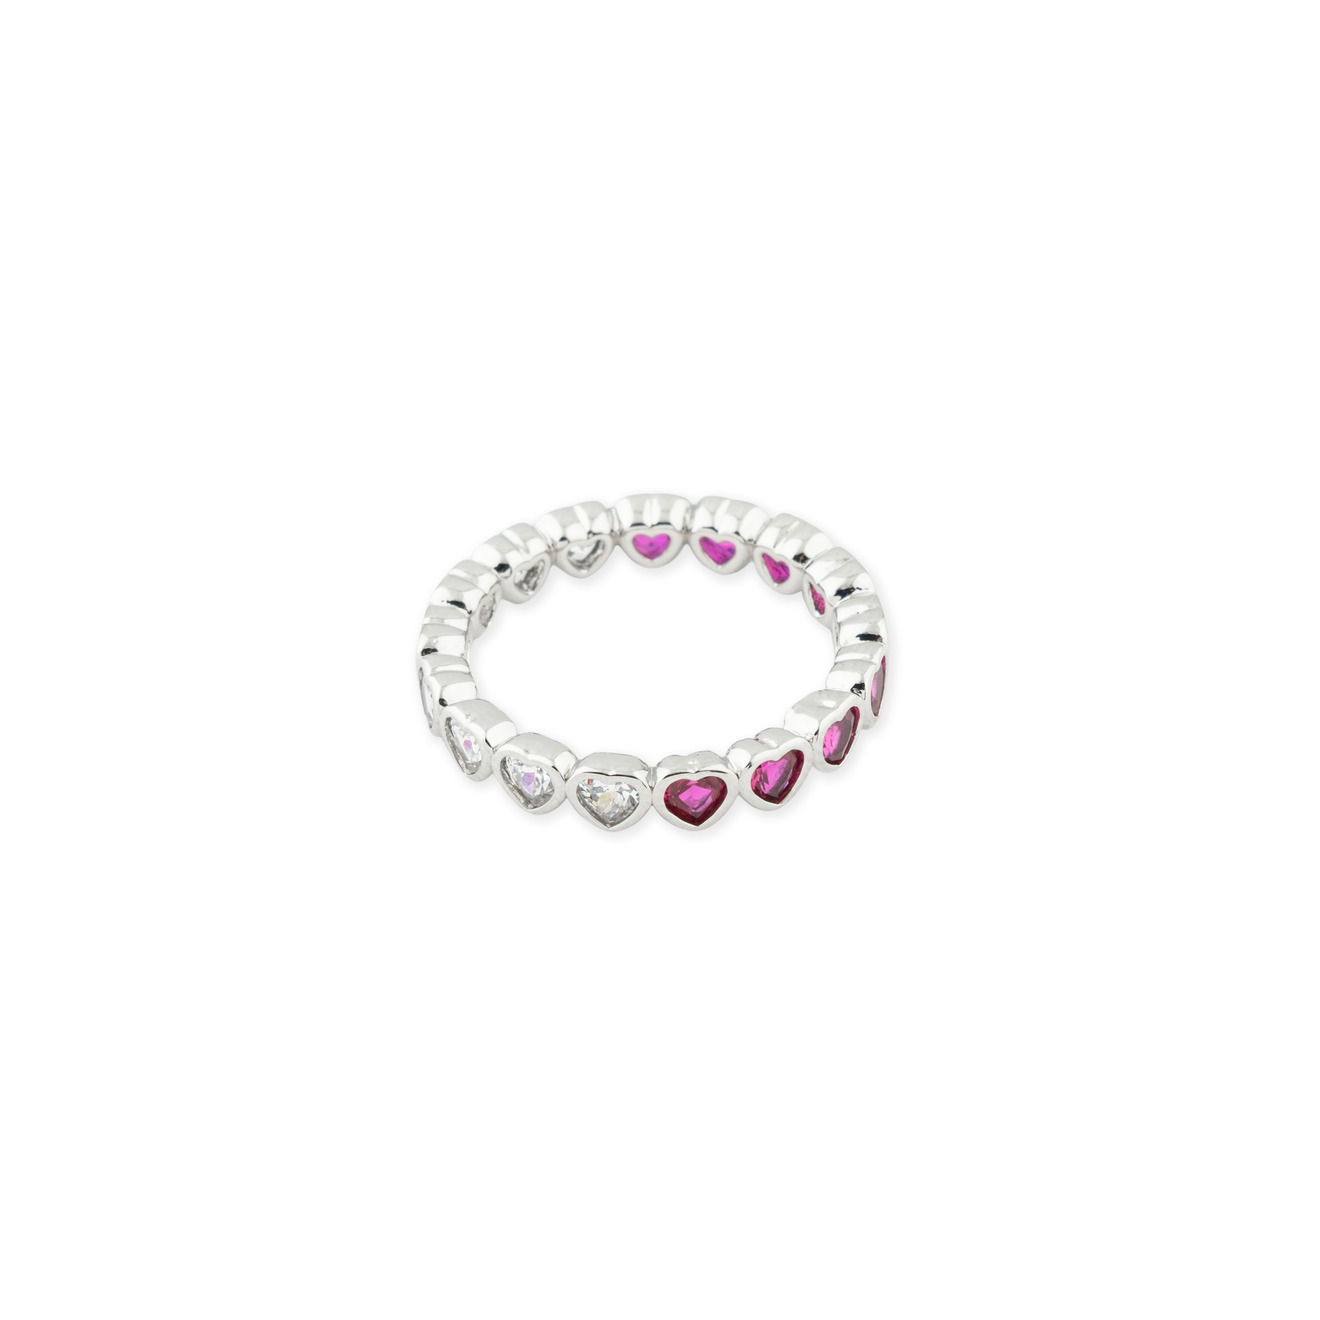 Herald Percy Серебристое кольцо из сердец с белыми и розовыми кристаллами herald percy серебристое колье с кристаллами